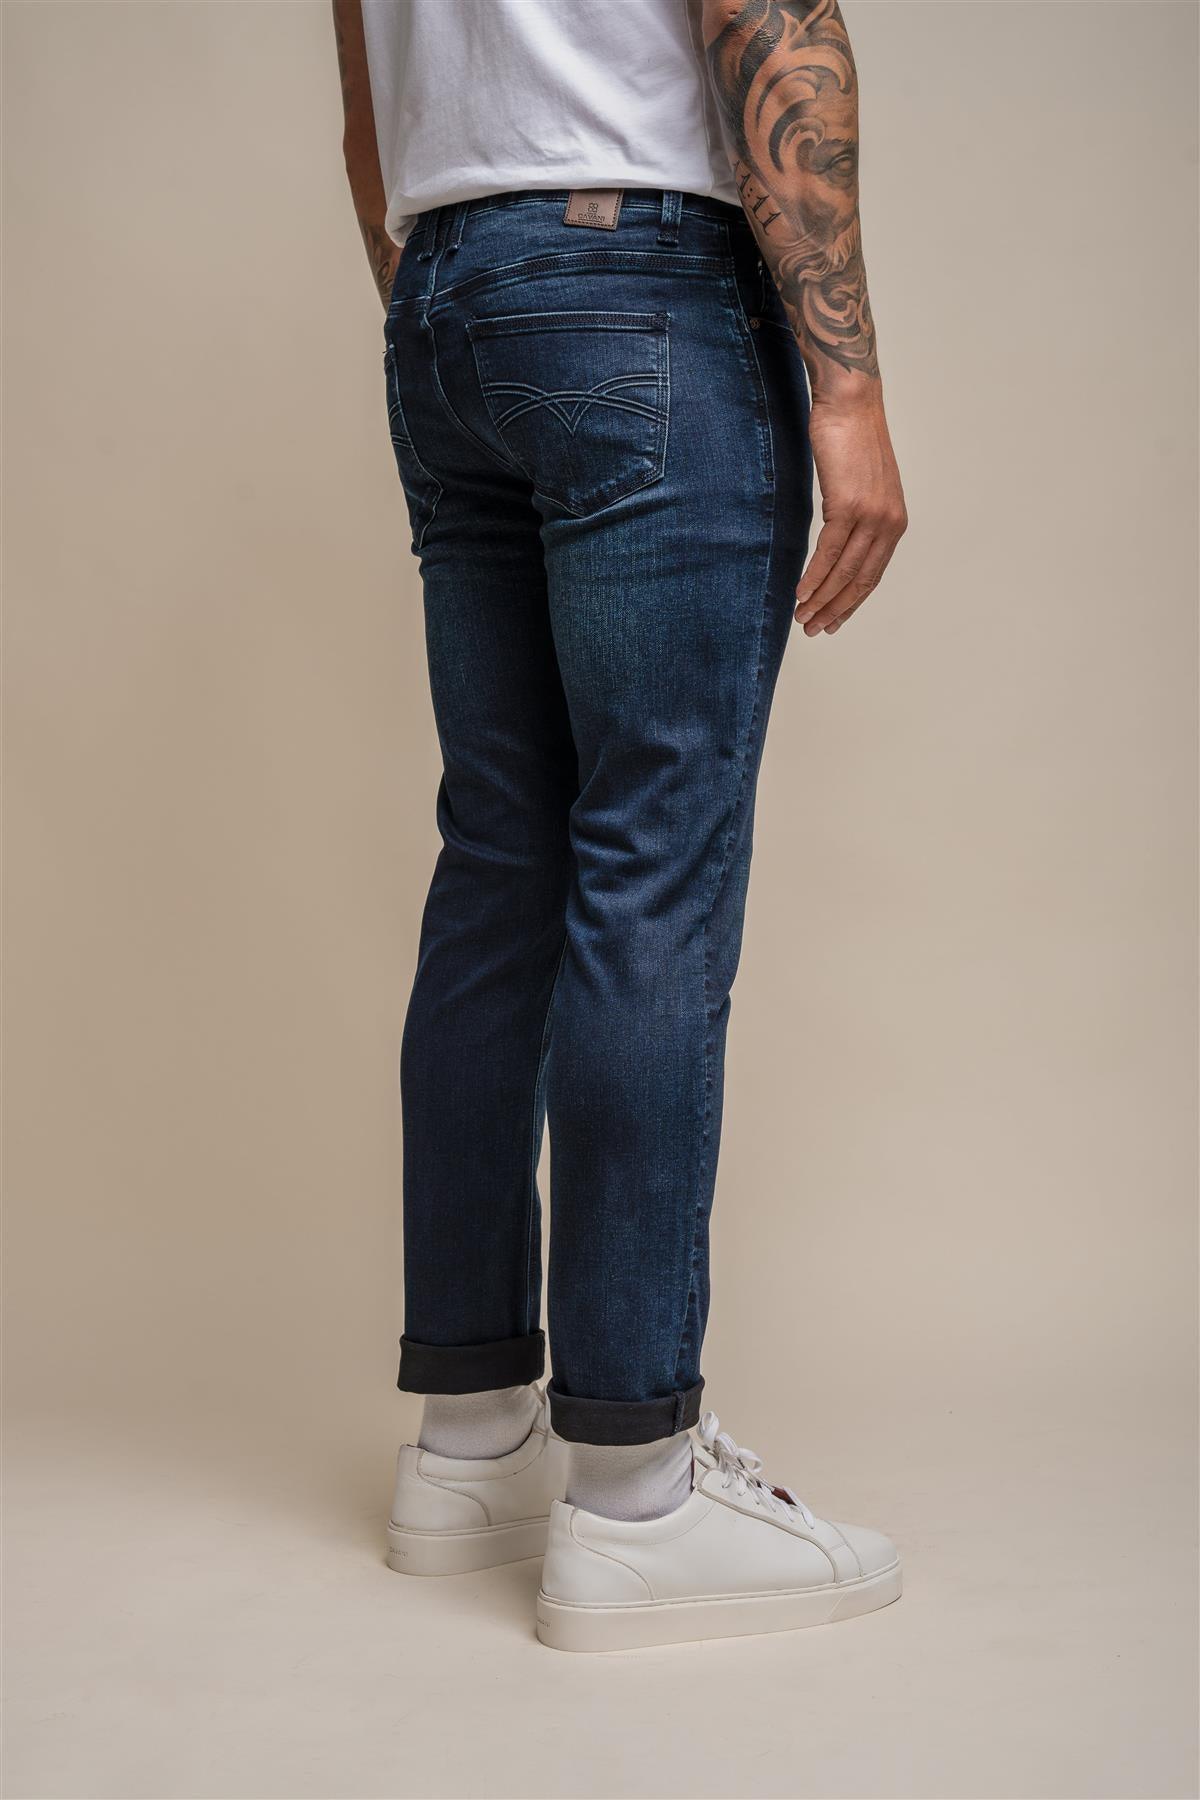 Elliot Navy Stretch Slim Fit Jeans - EsquireFormalWear